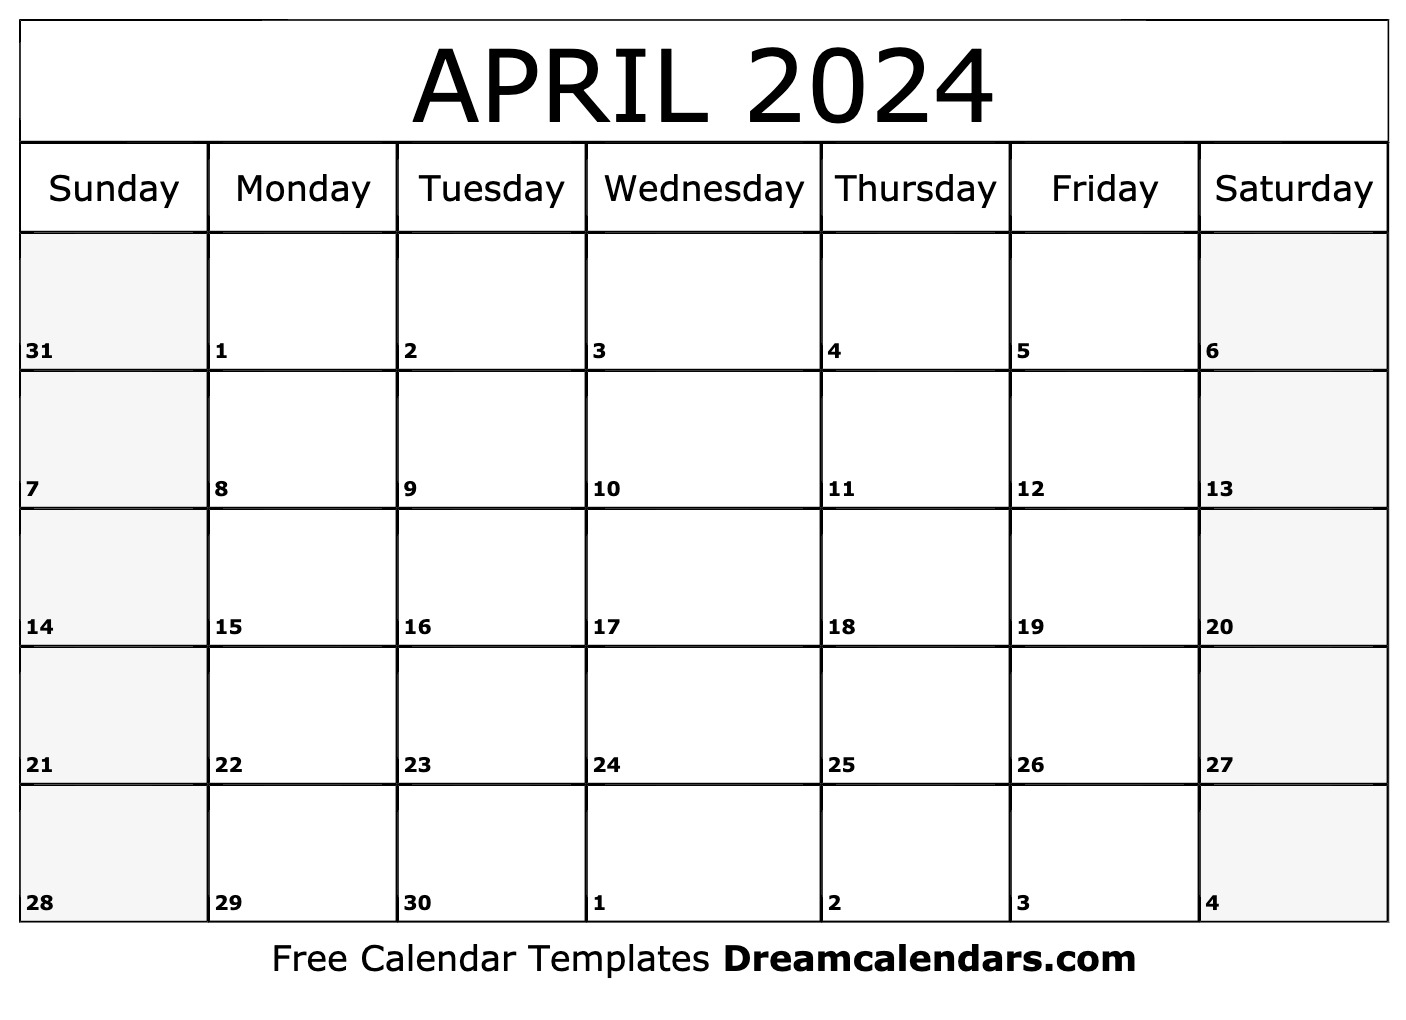 April 2024 Calendar | Free Blank Printable With Holidays with regard to April 10 2024 Calendar